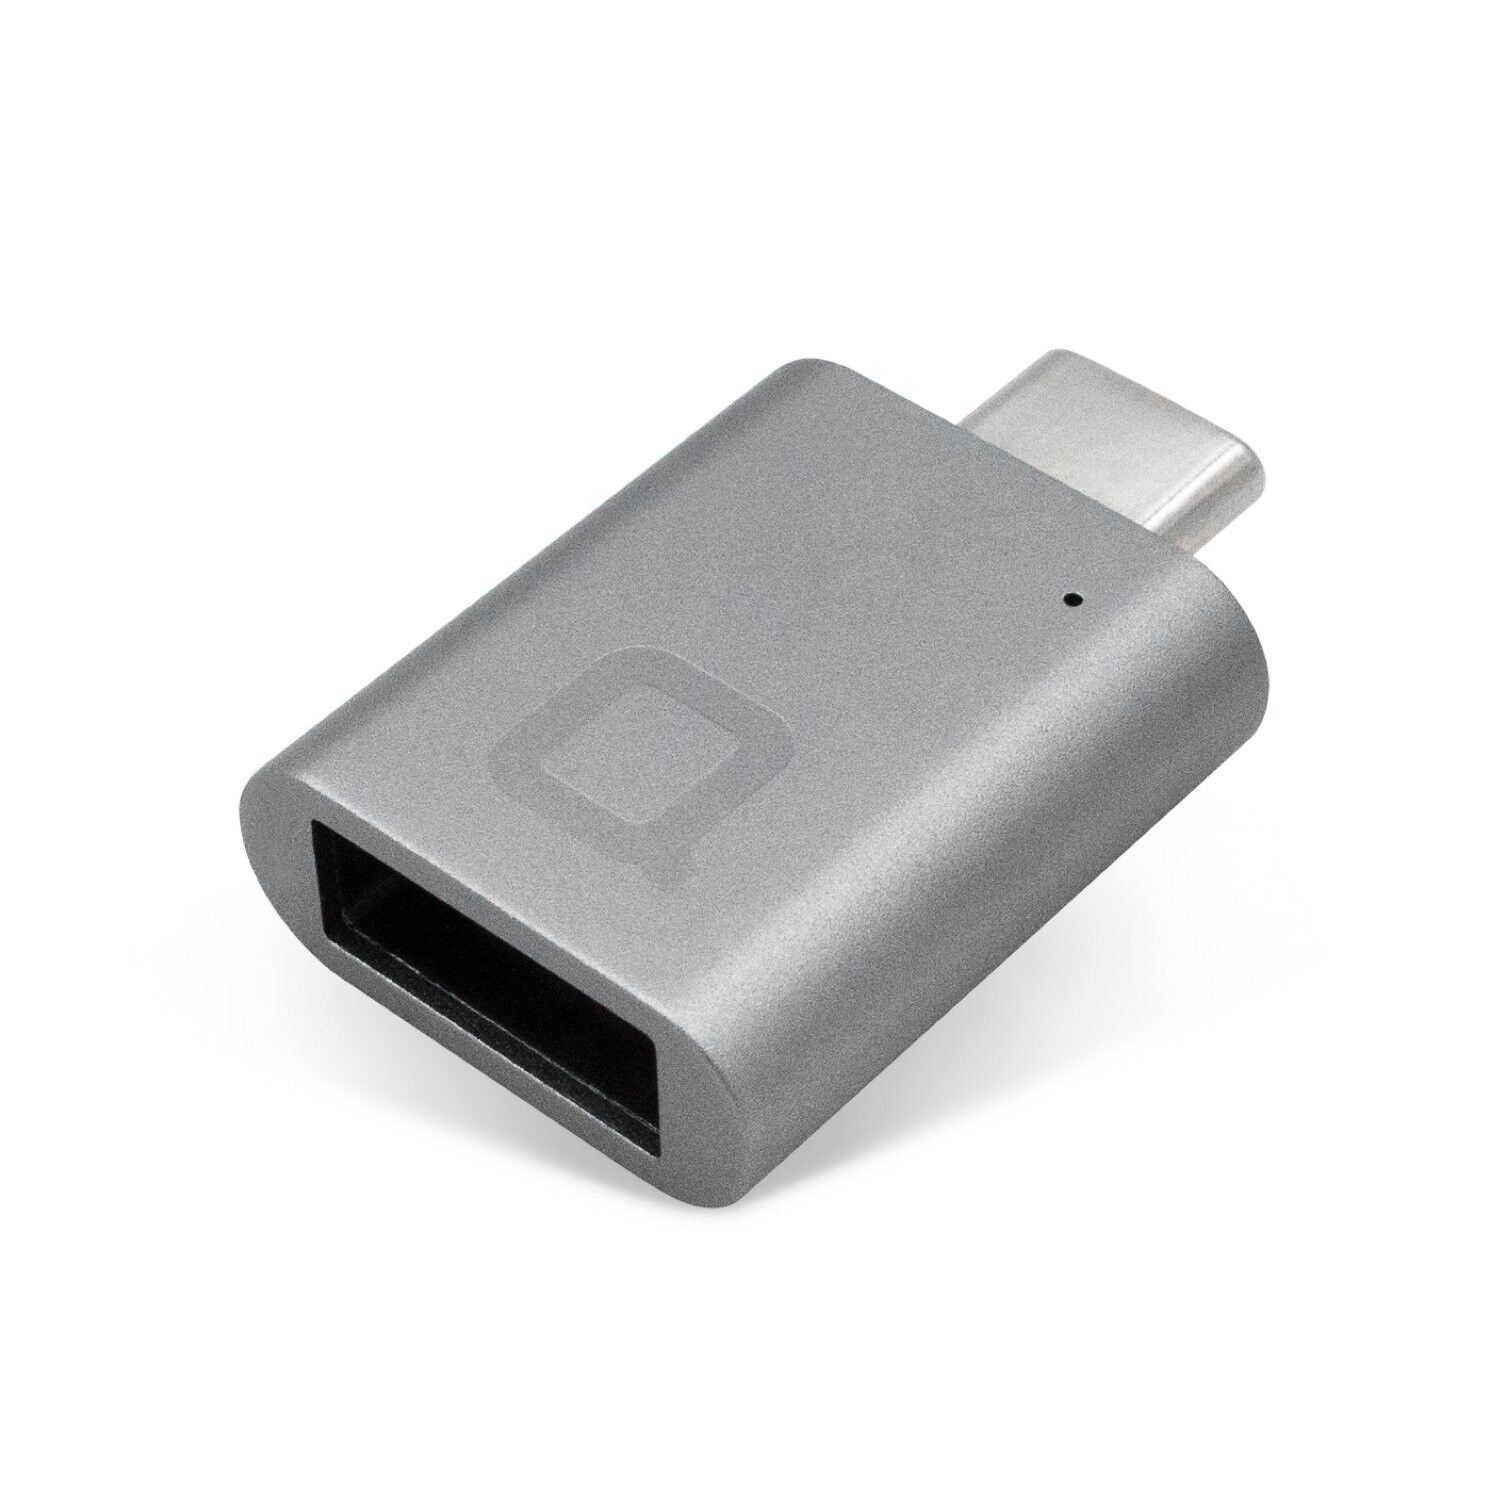 Kwaadaardig Havoc Uitputting nonda USB-C to USB 3.0 Mini Adapter [Worlds Smallest] Aluminum Body with  Indi... 867549000171 | eBay